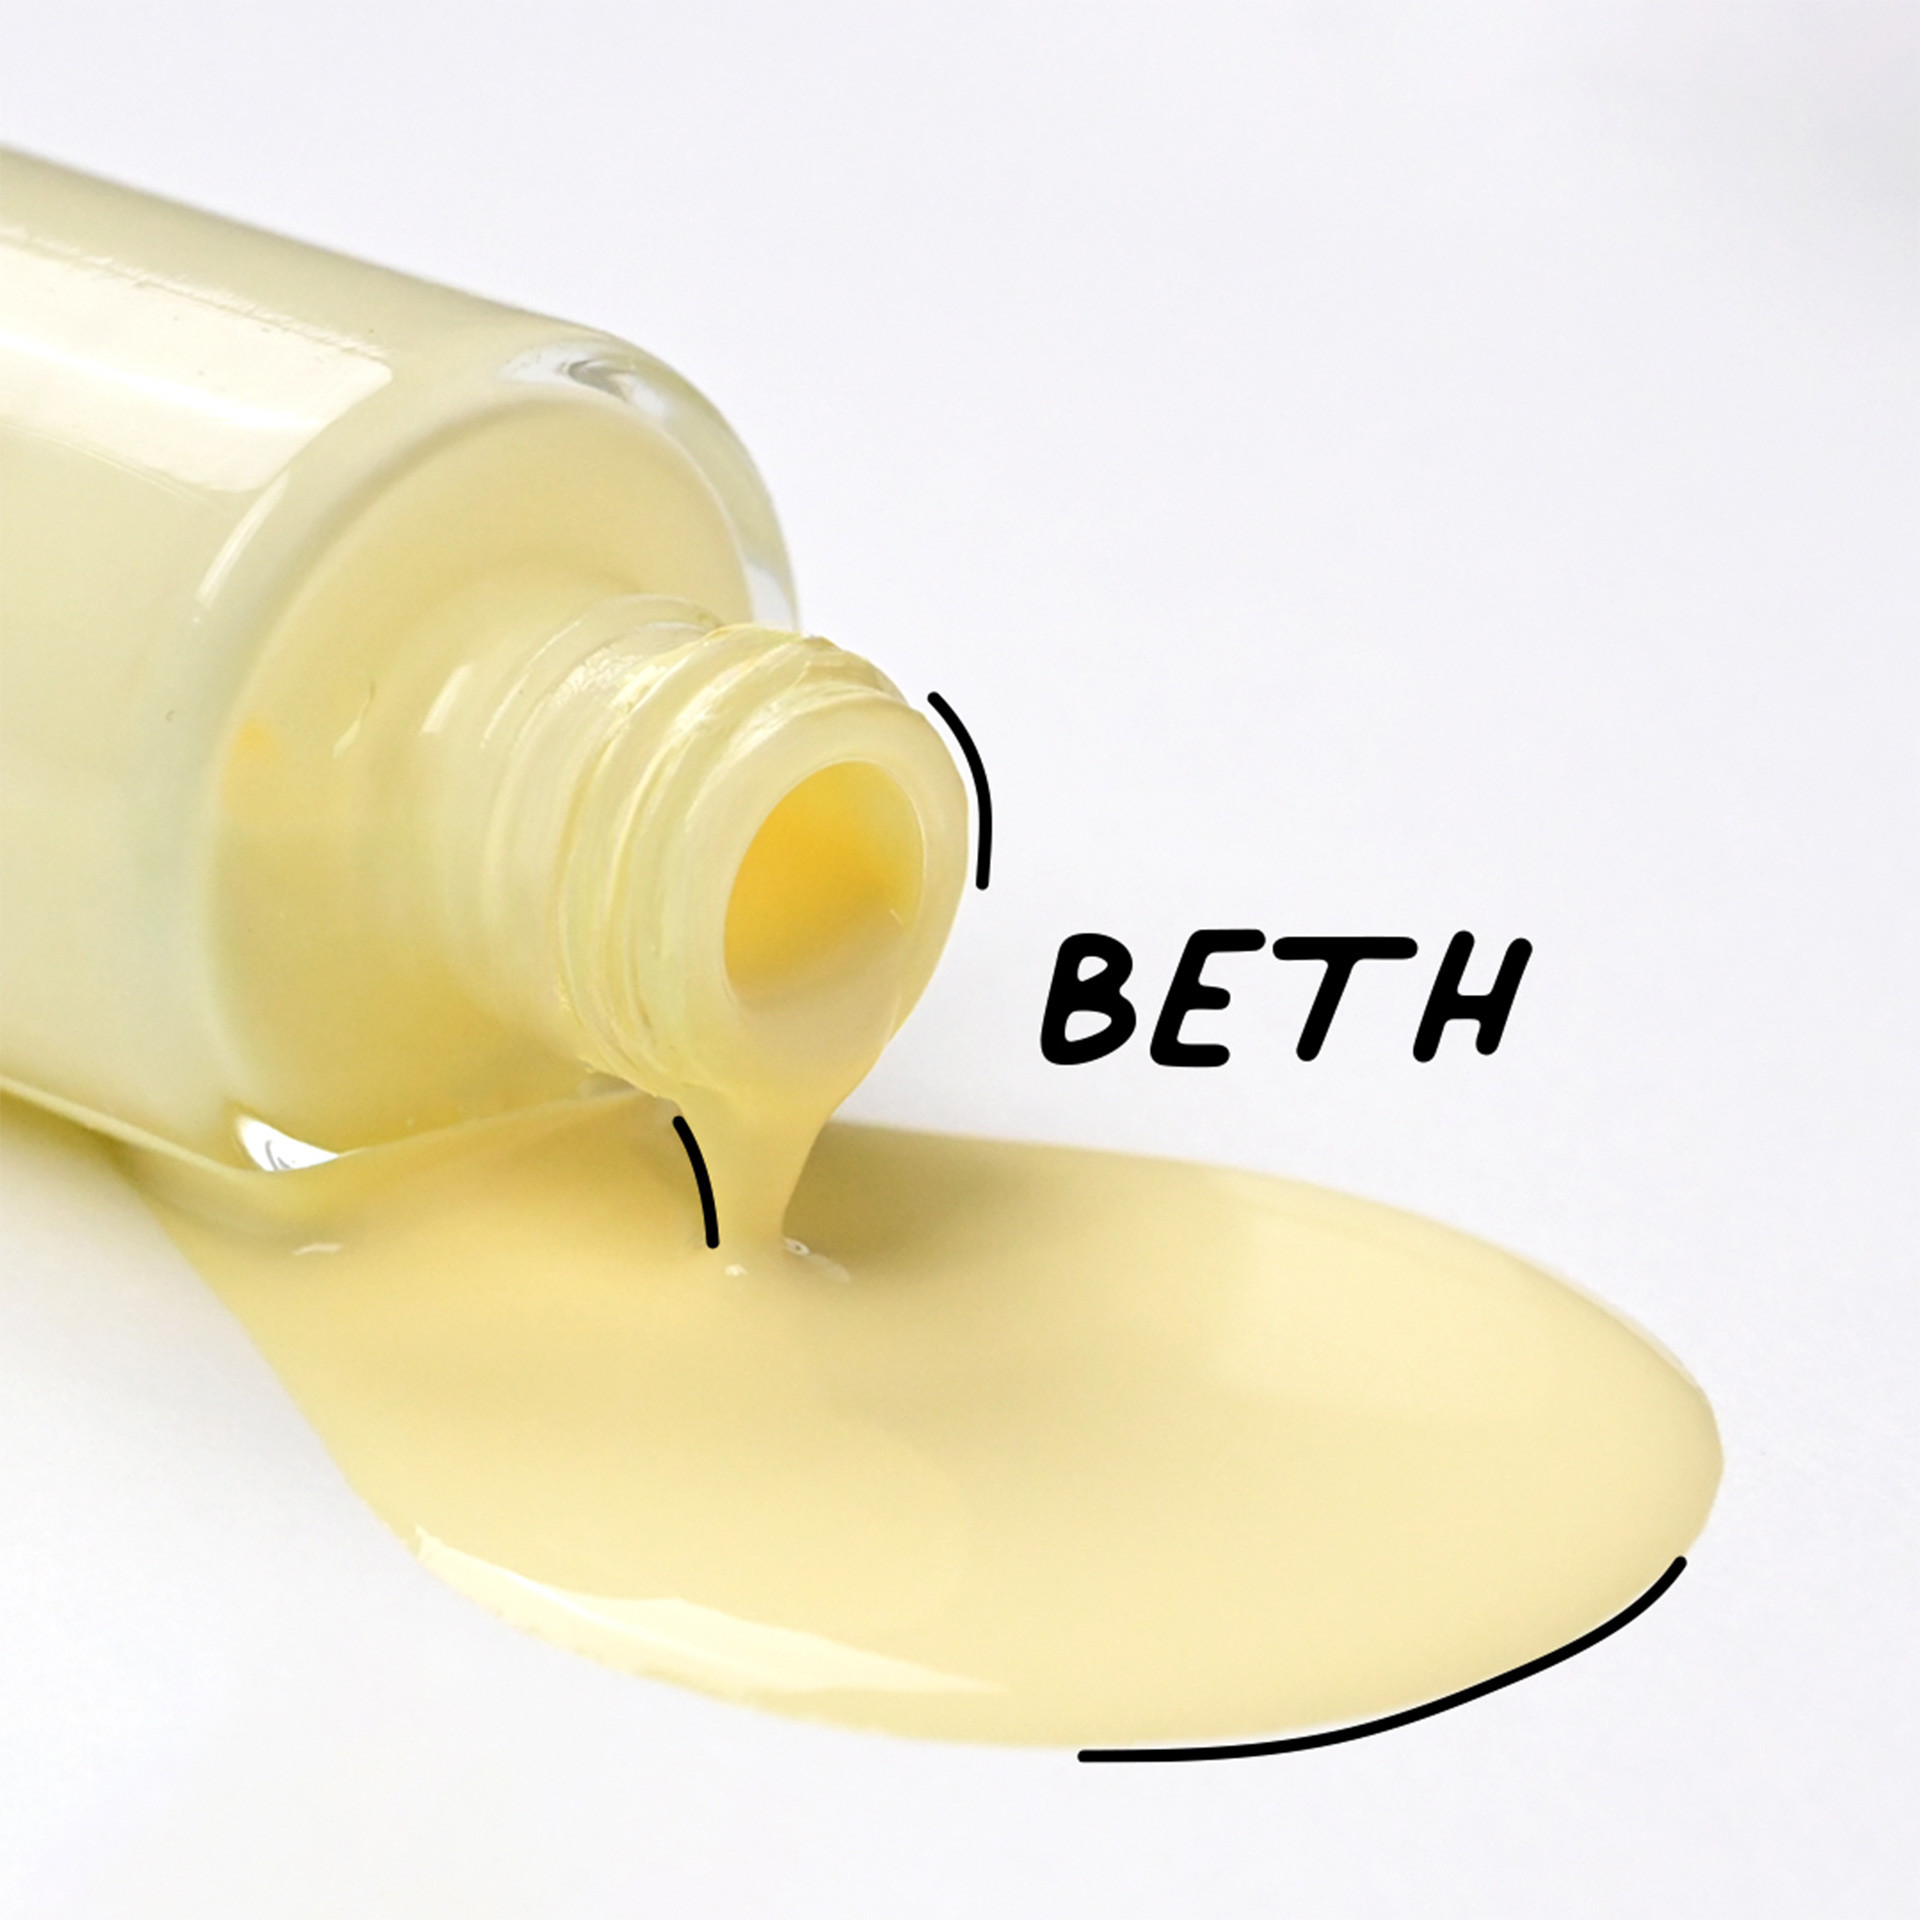 Beth - pastel yellow